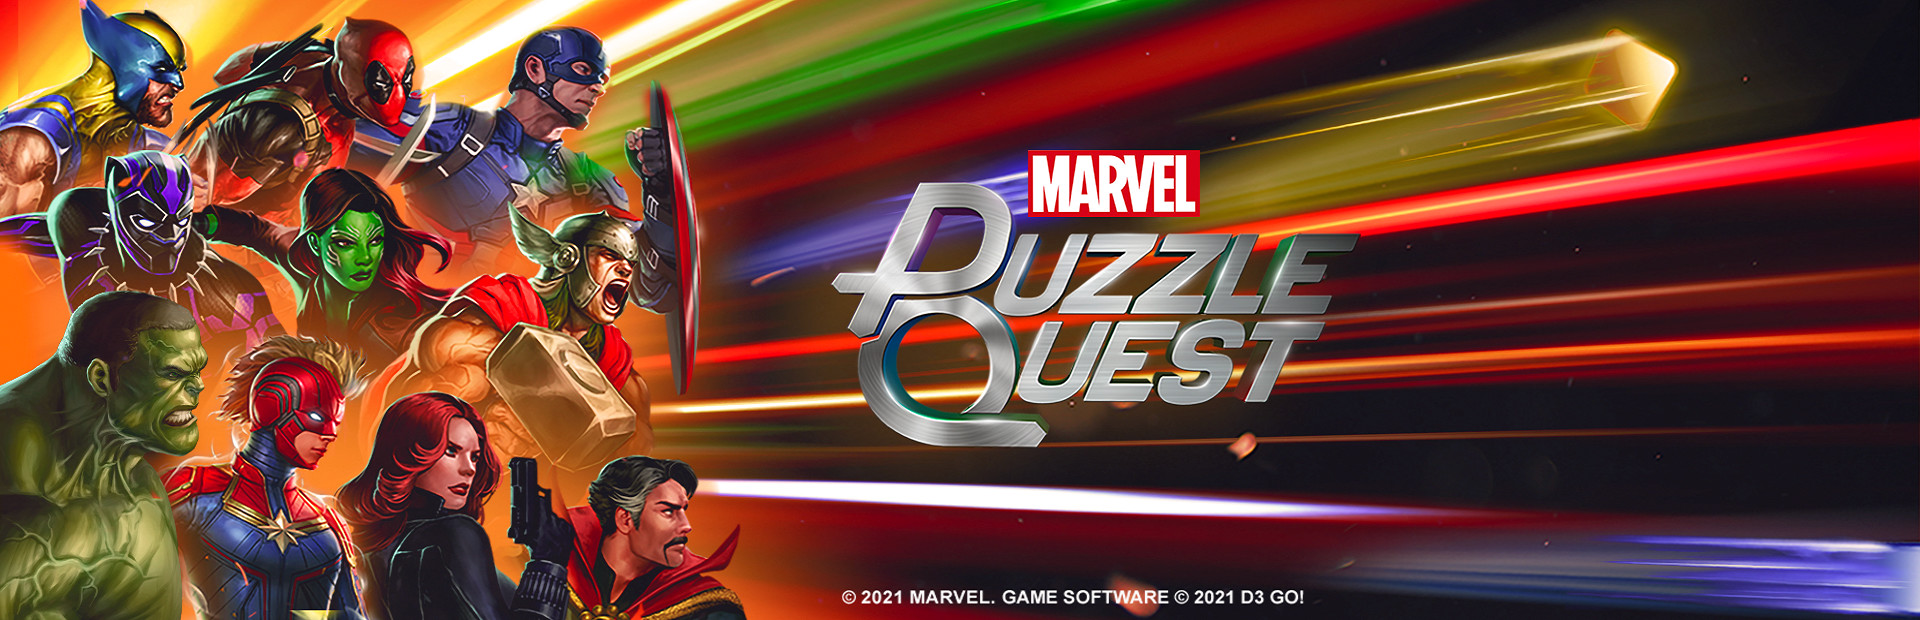 MARVEL Puzzle Quest cover image